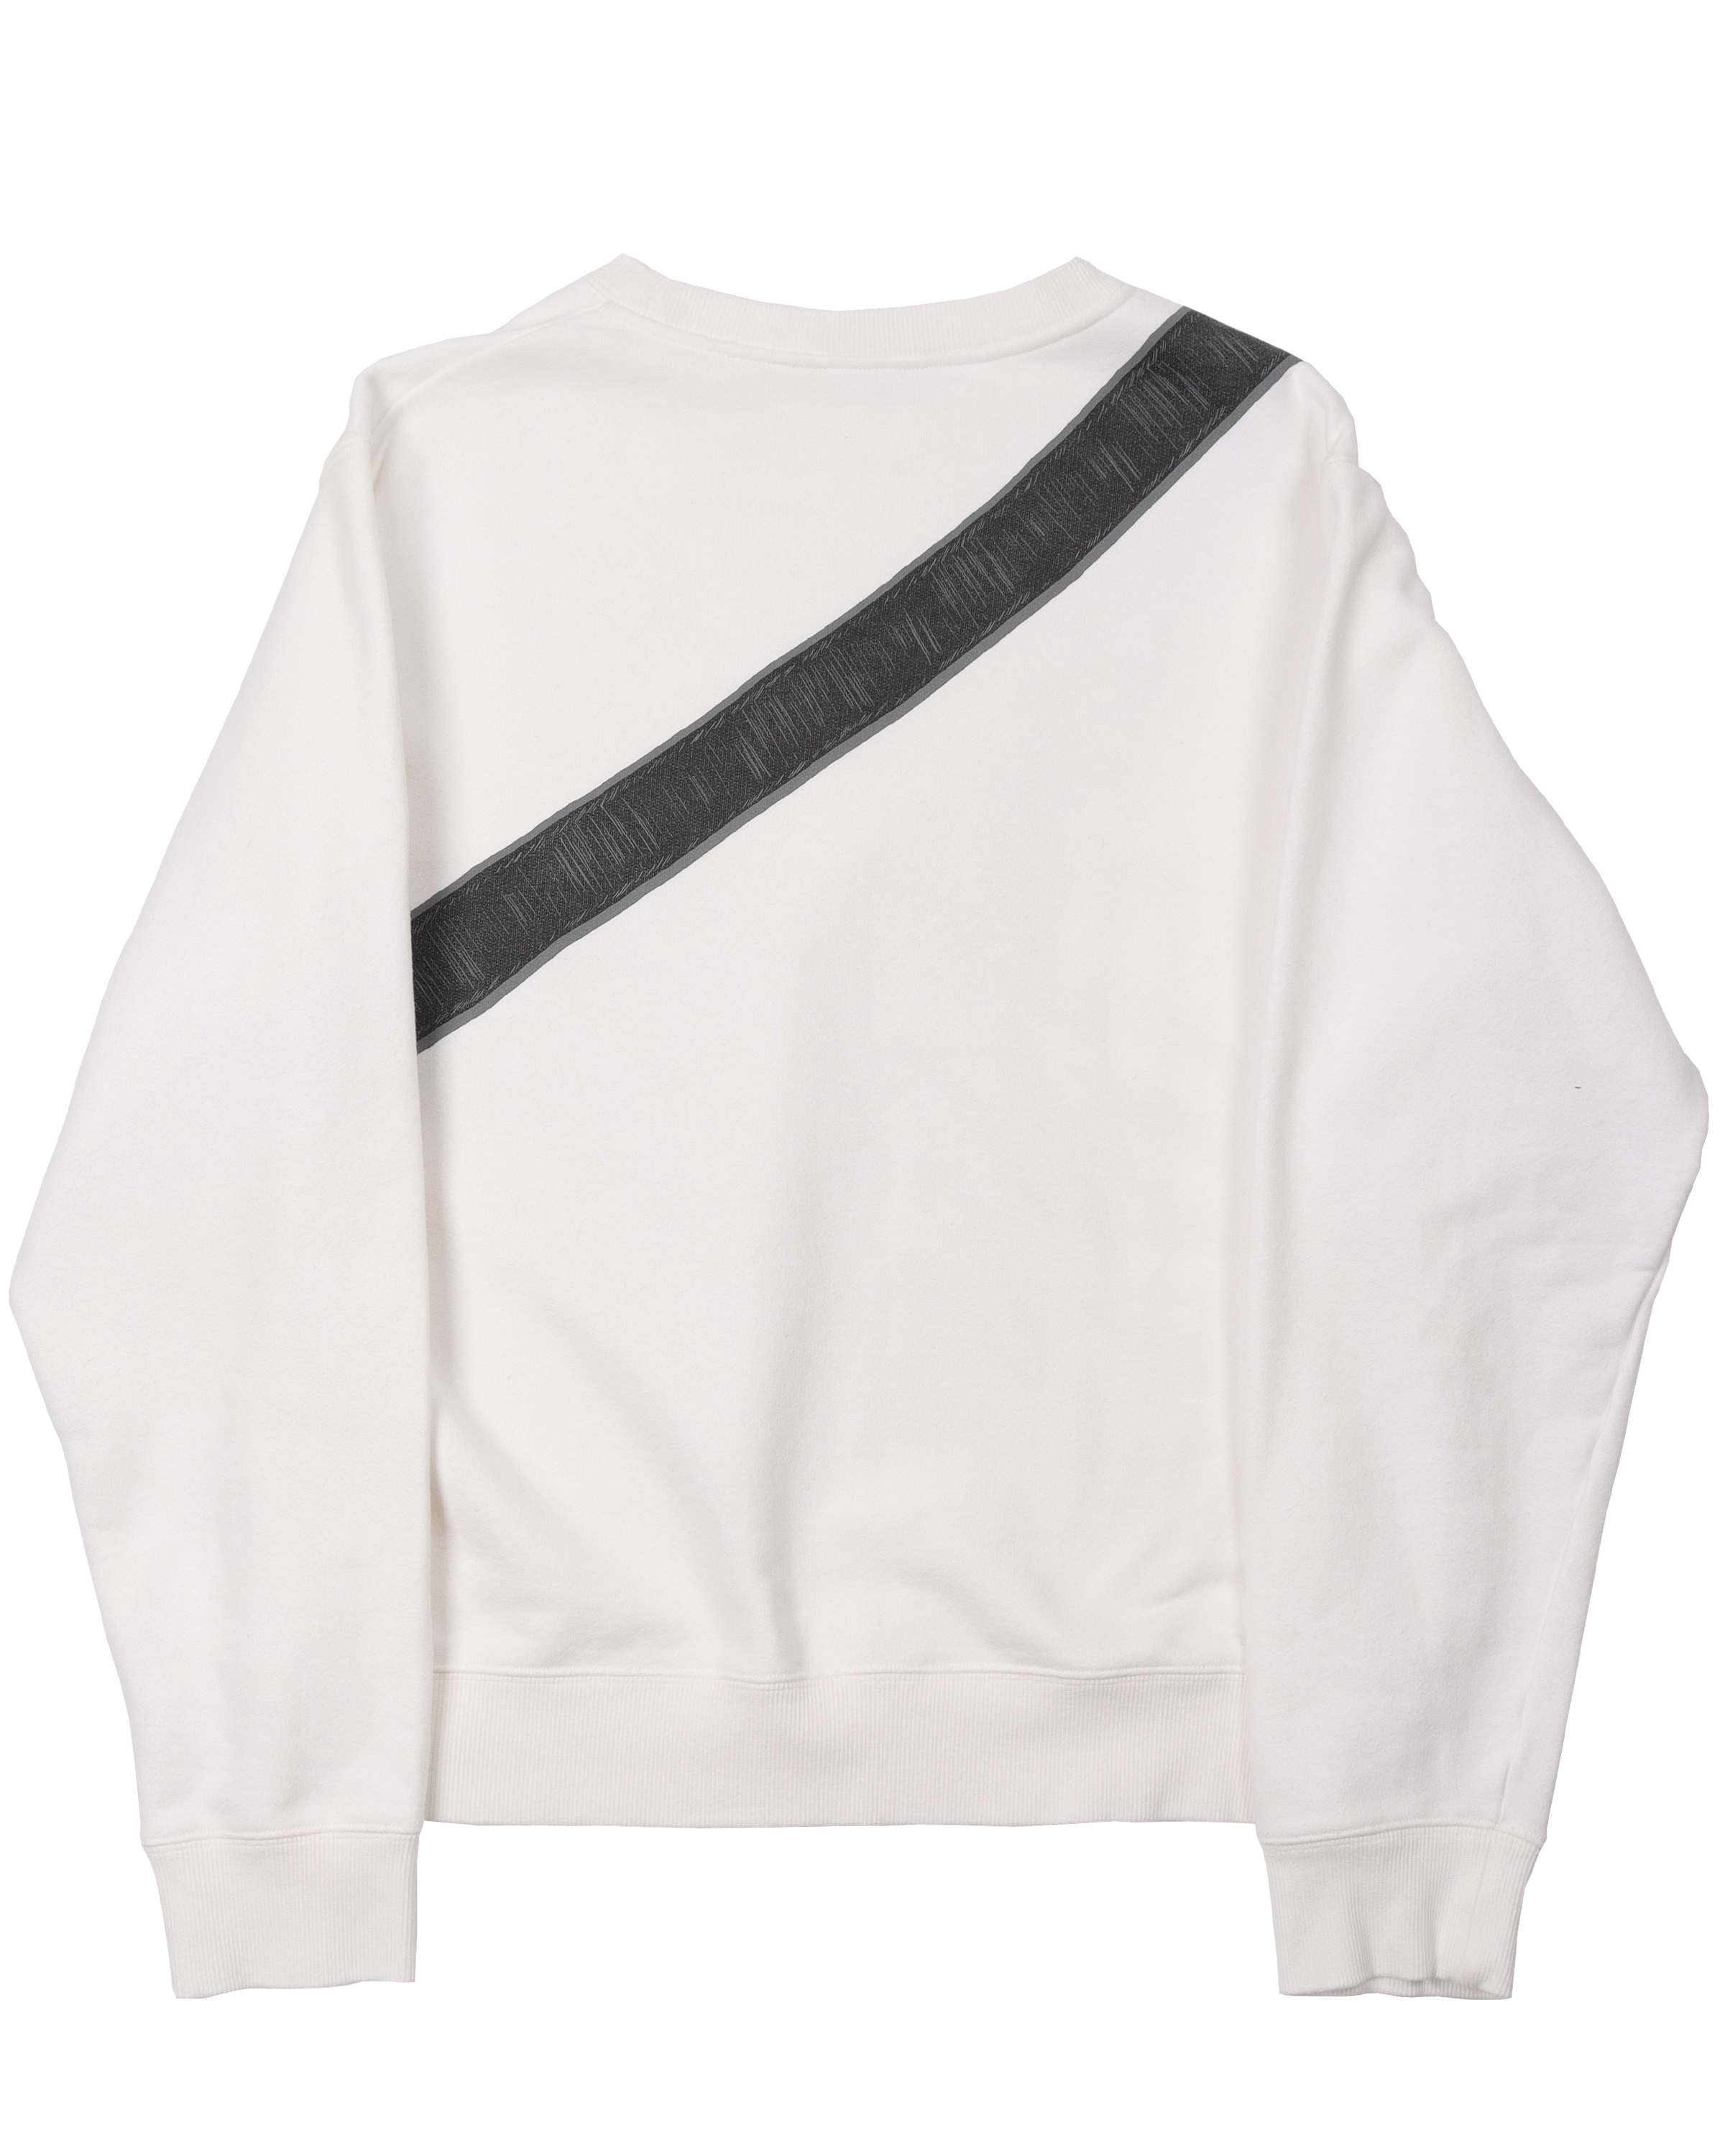 HOMME 2020 SS Plain Crewneck Sweatshirt